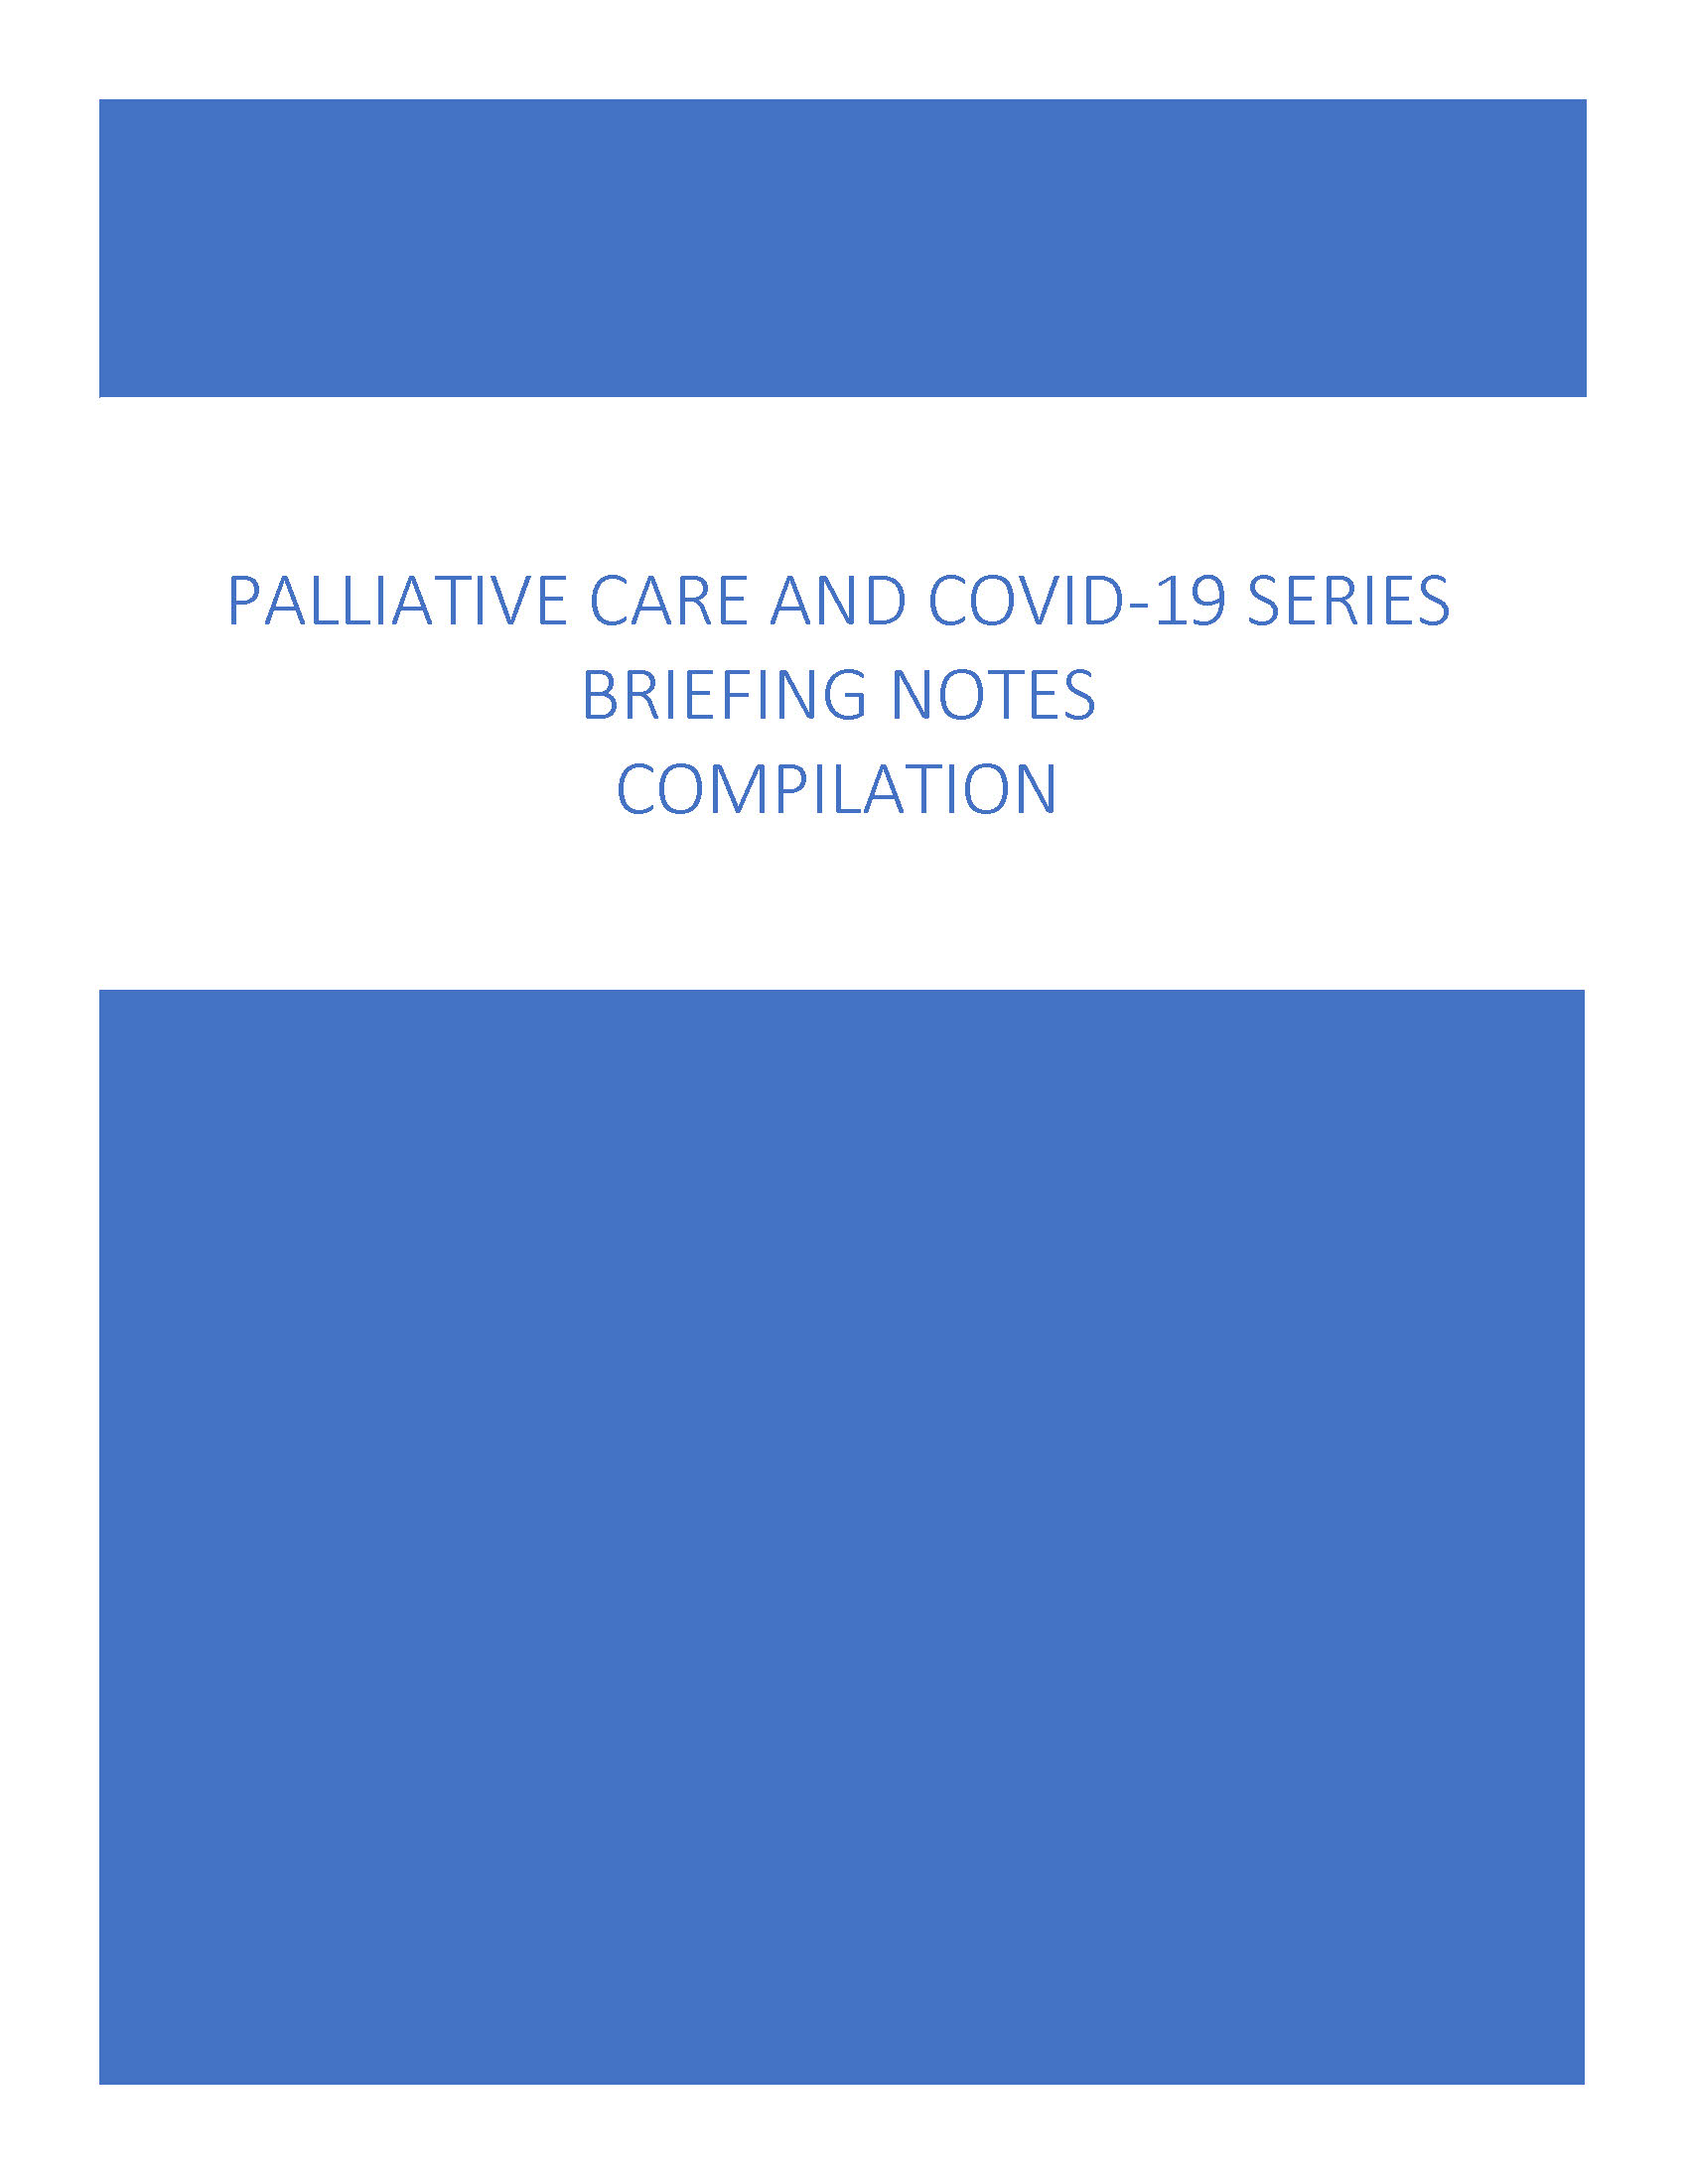 IAHPC, ICPCN, PALCHASE e WHPCA disponibilizam série Global Palliative Care e COVID-19